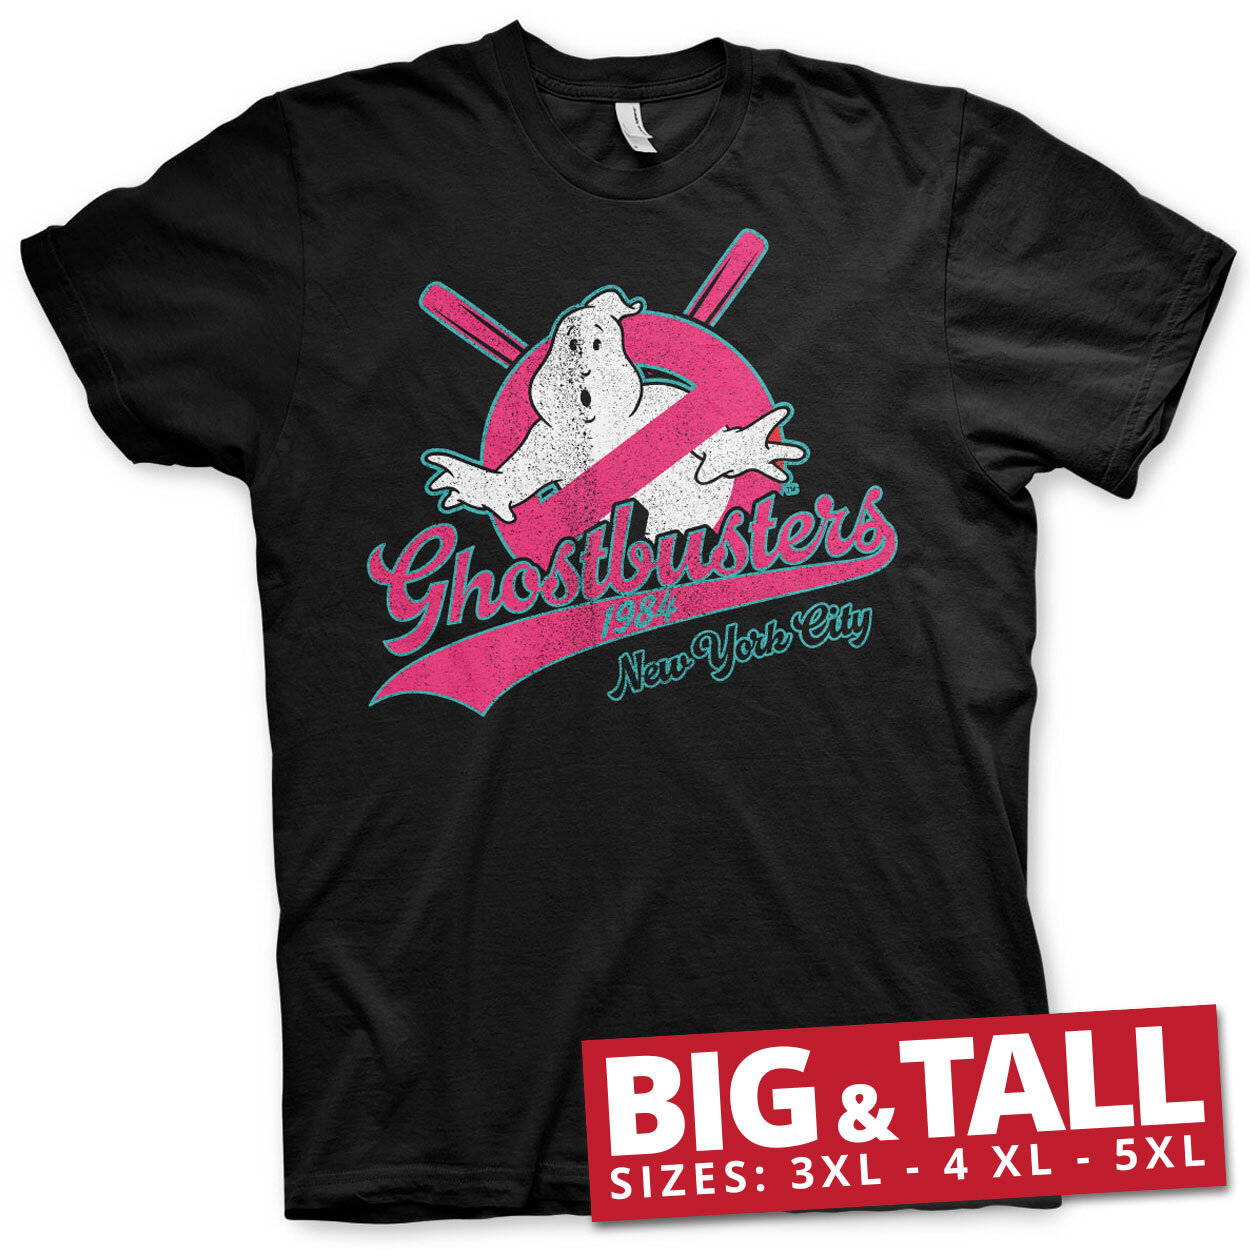 Ghostbusters - New York City Big & Tall T-Shirt